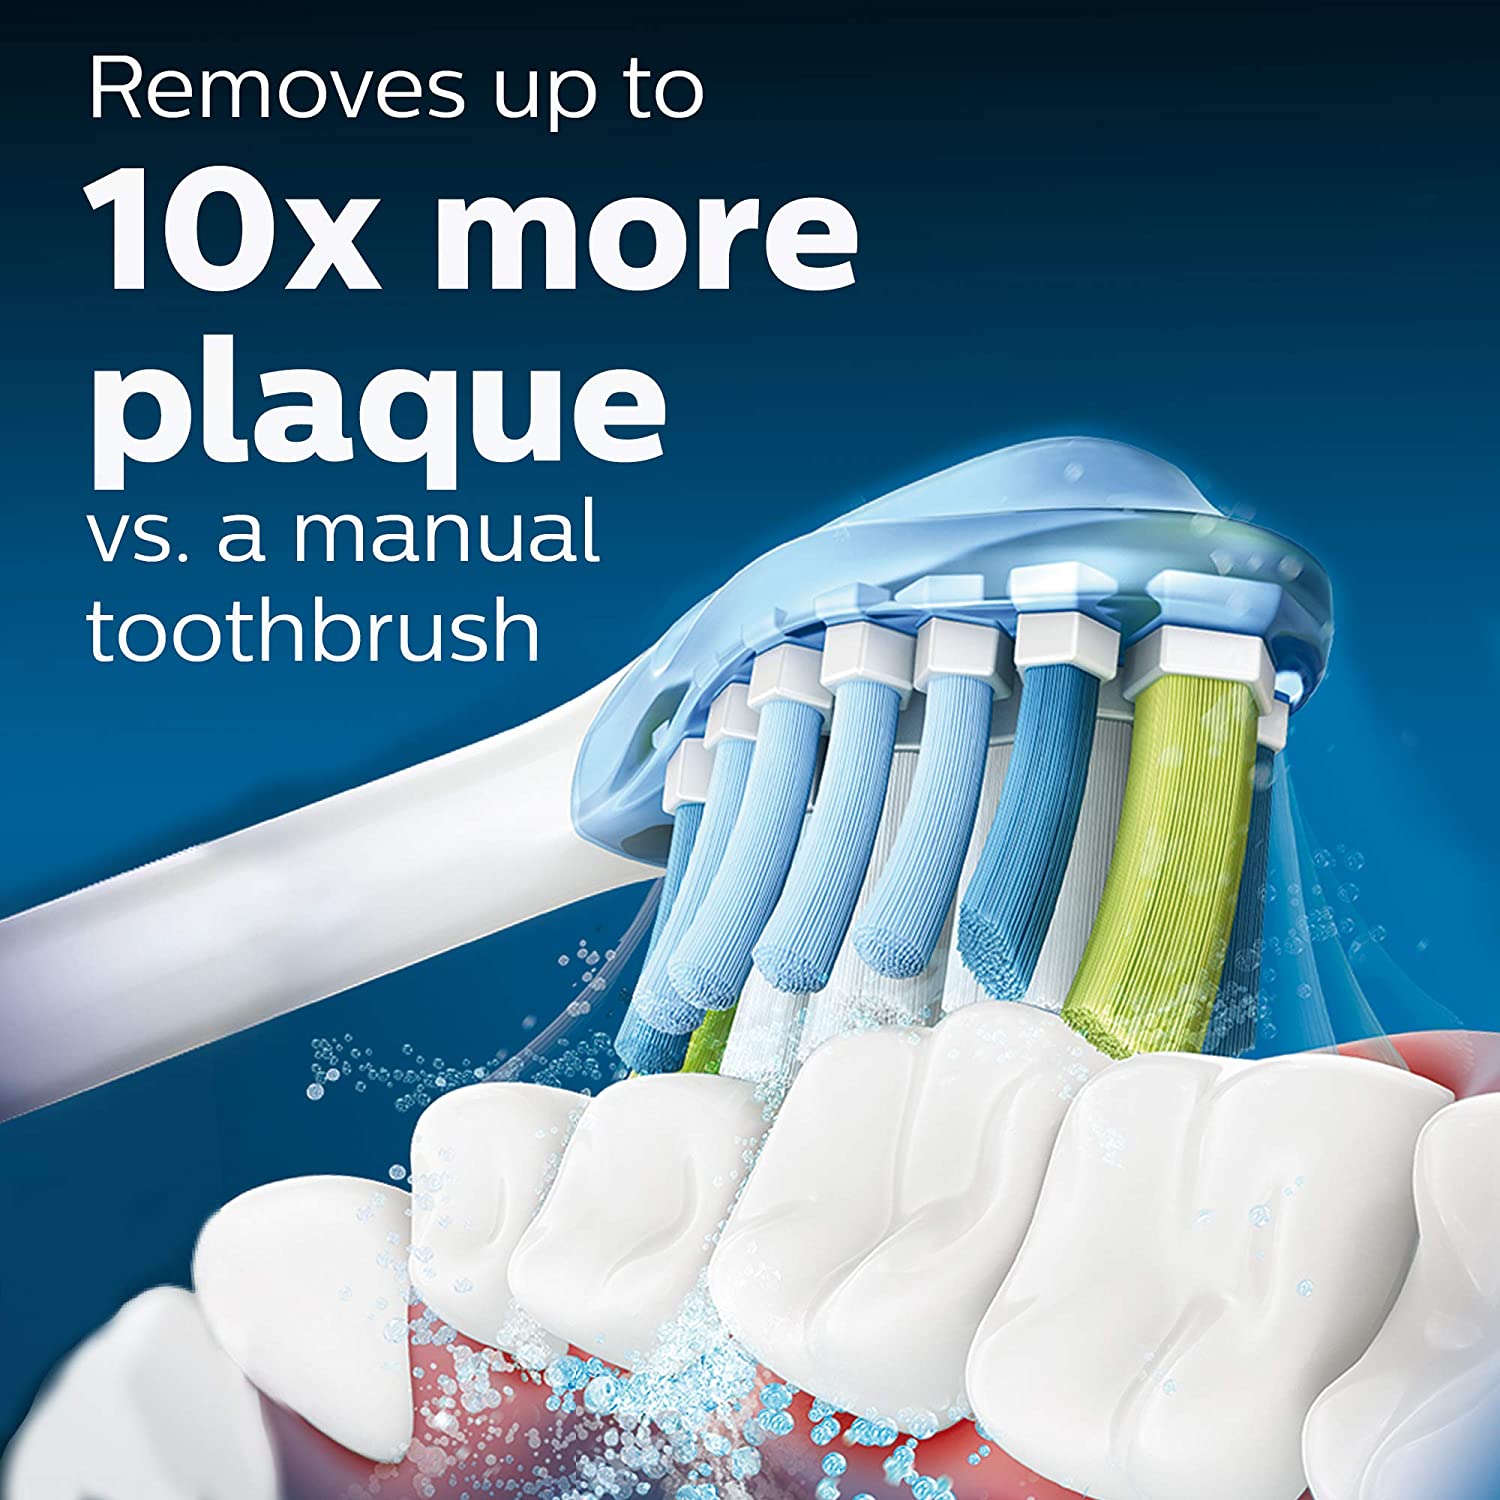 Philips Sonicare C3 Premium Plaque Control Toothbrush Head, HX9042/65, White, 2 Pack - Pro-Distributing